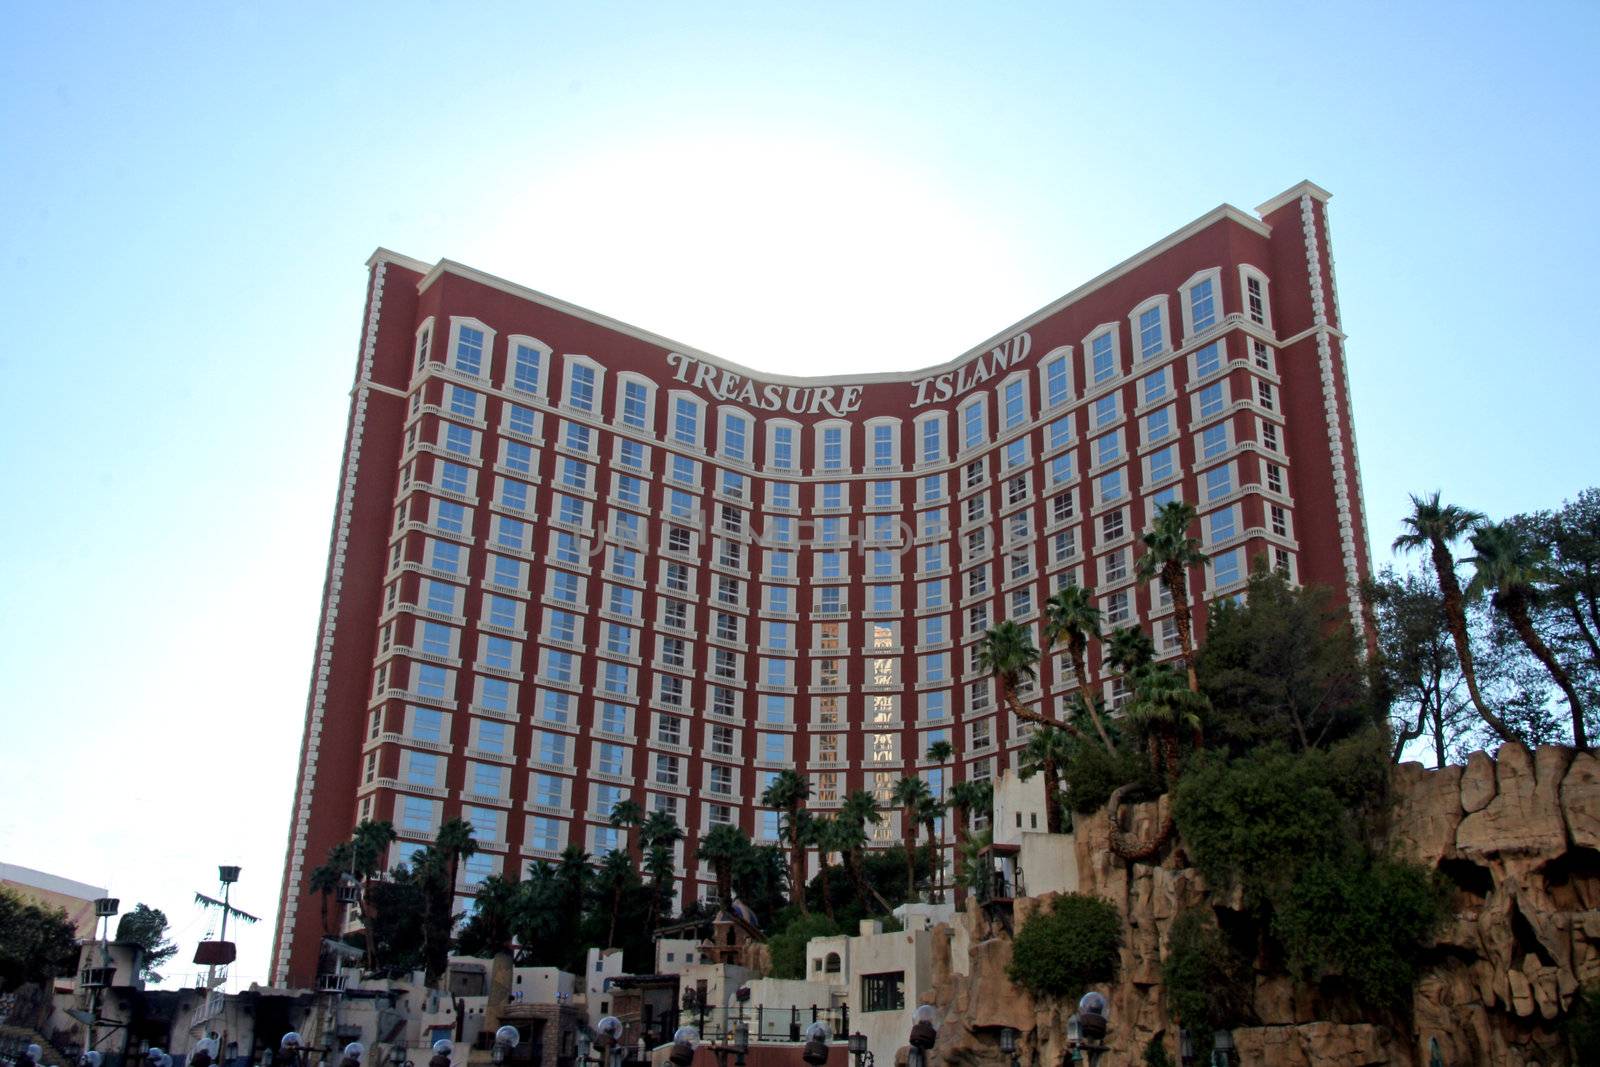 An exterior shot of Treasure Island hotel and casino in Las Vegas